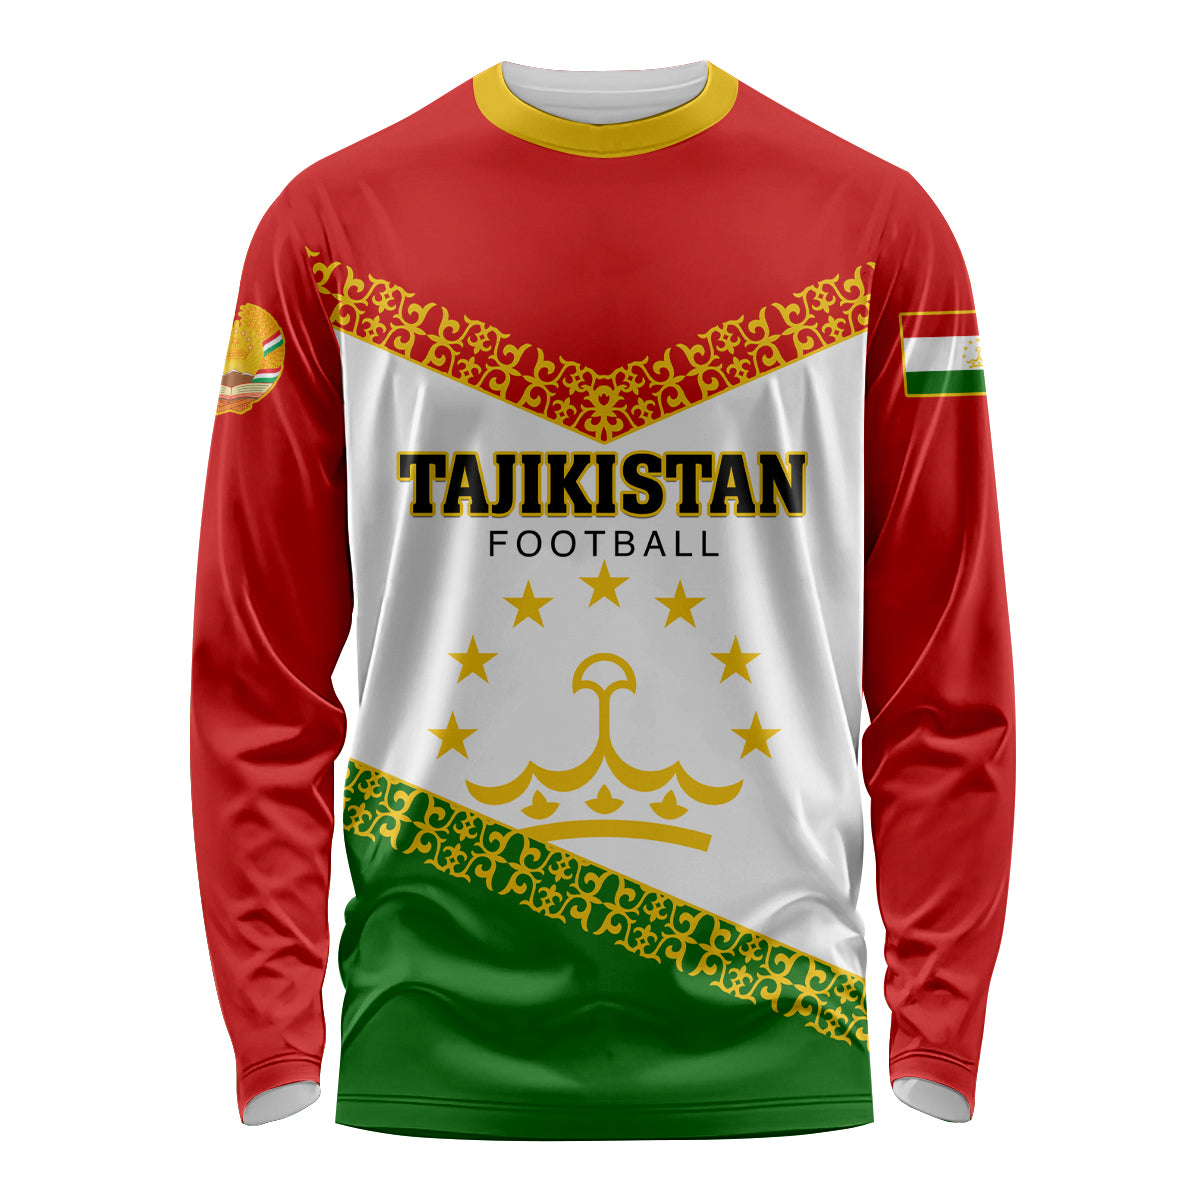 Tajikistan Football Long Sleeve Shirt Come On Tadzhikistan